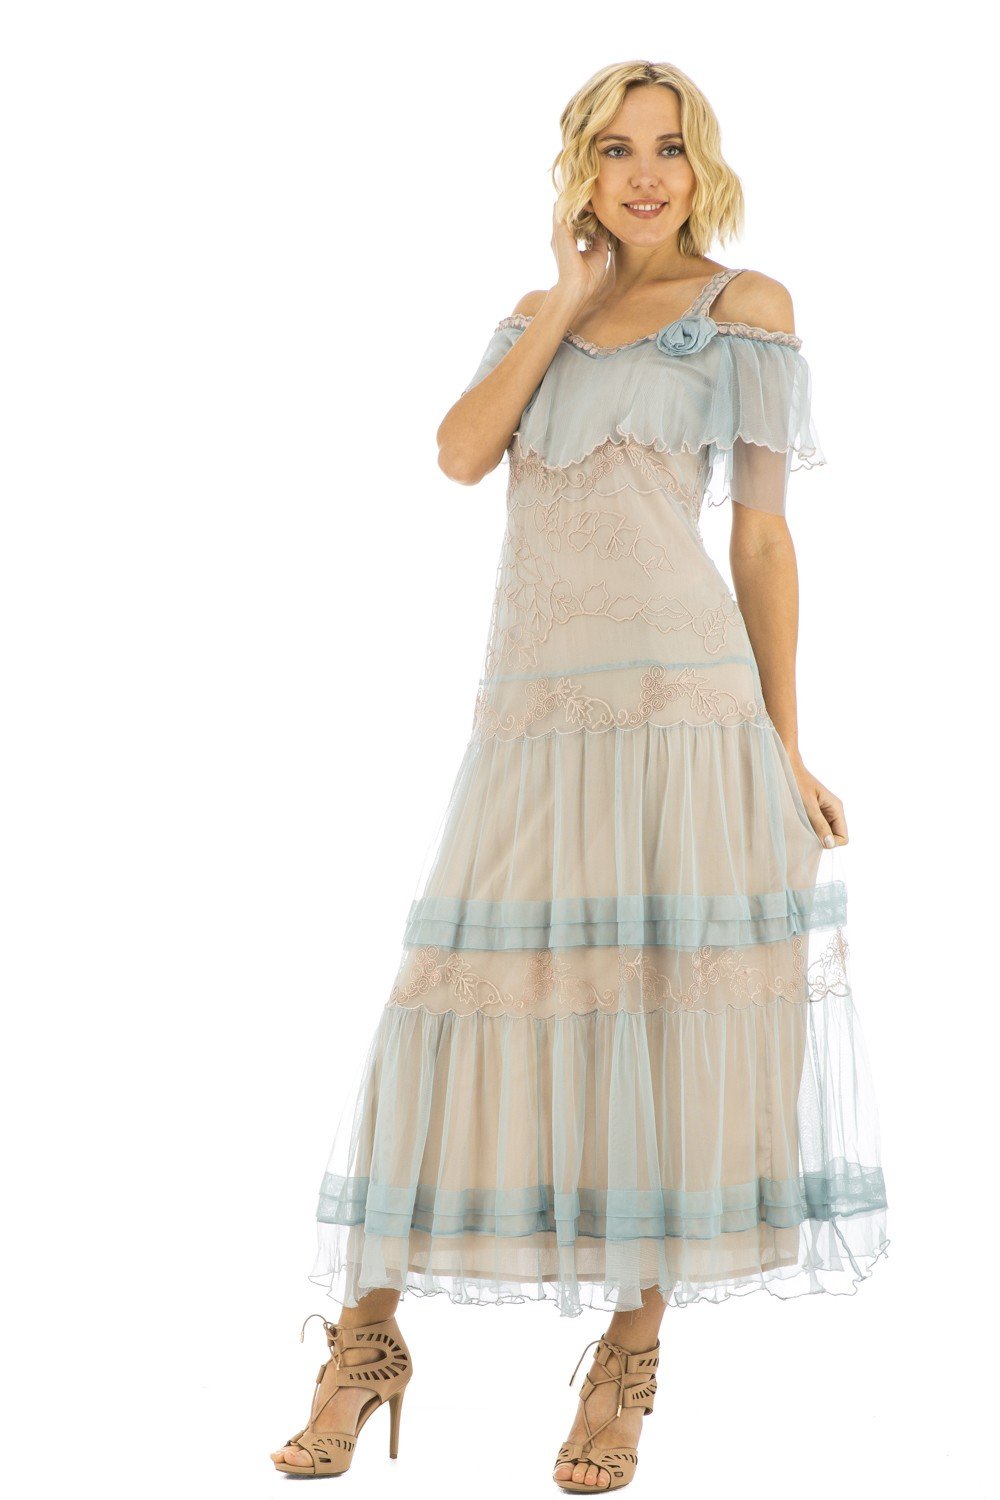 Delillah Vintage Inspired Wedding Dress 40271 in Blue by Nataya